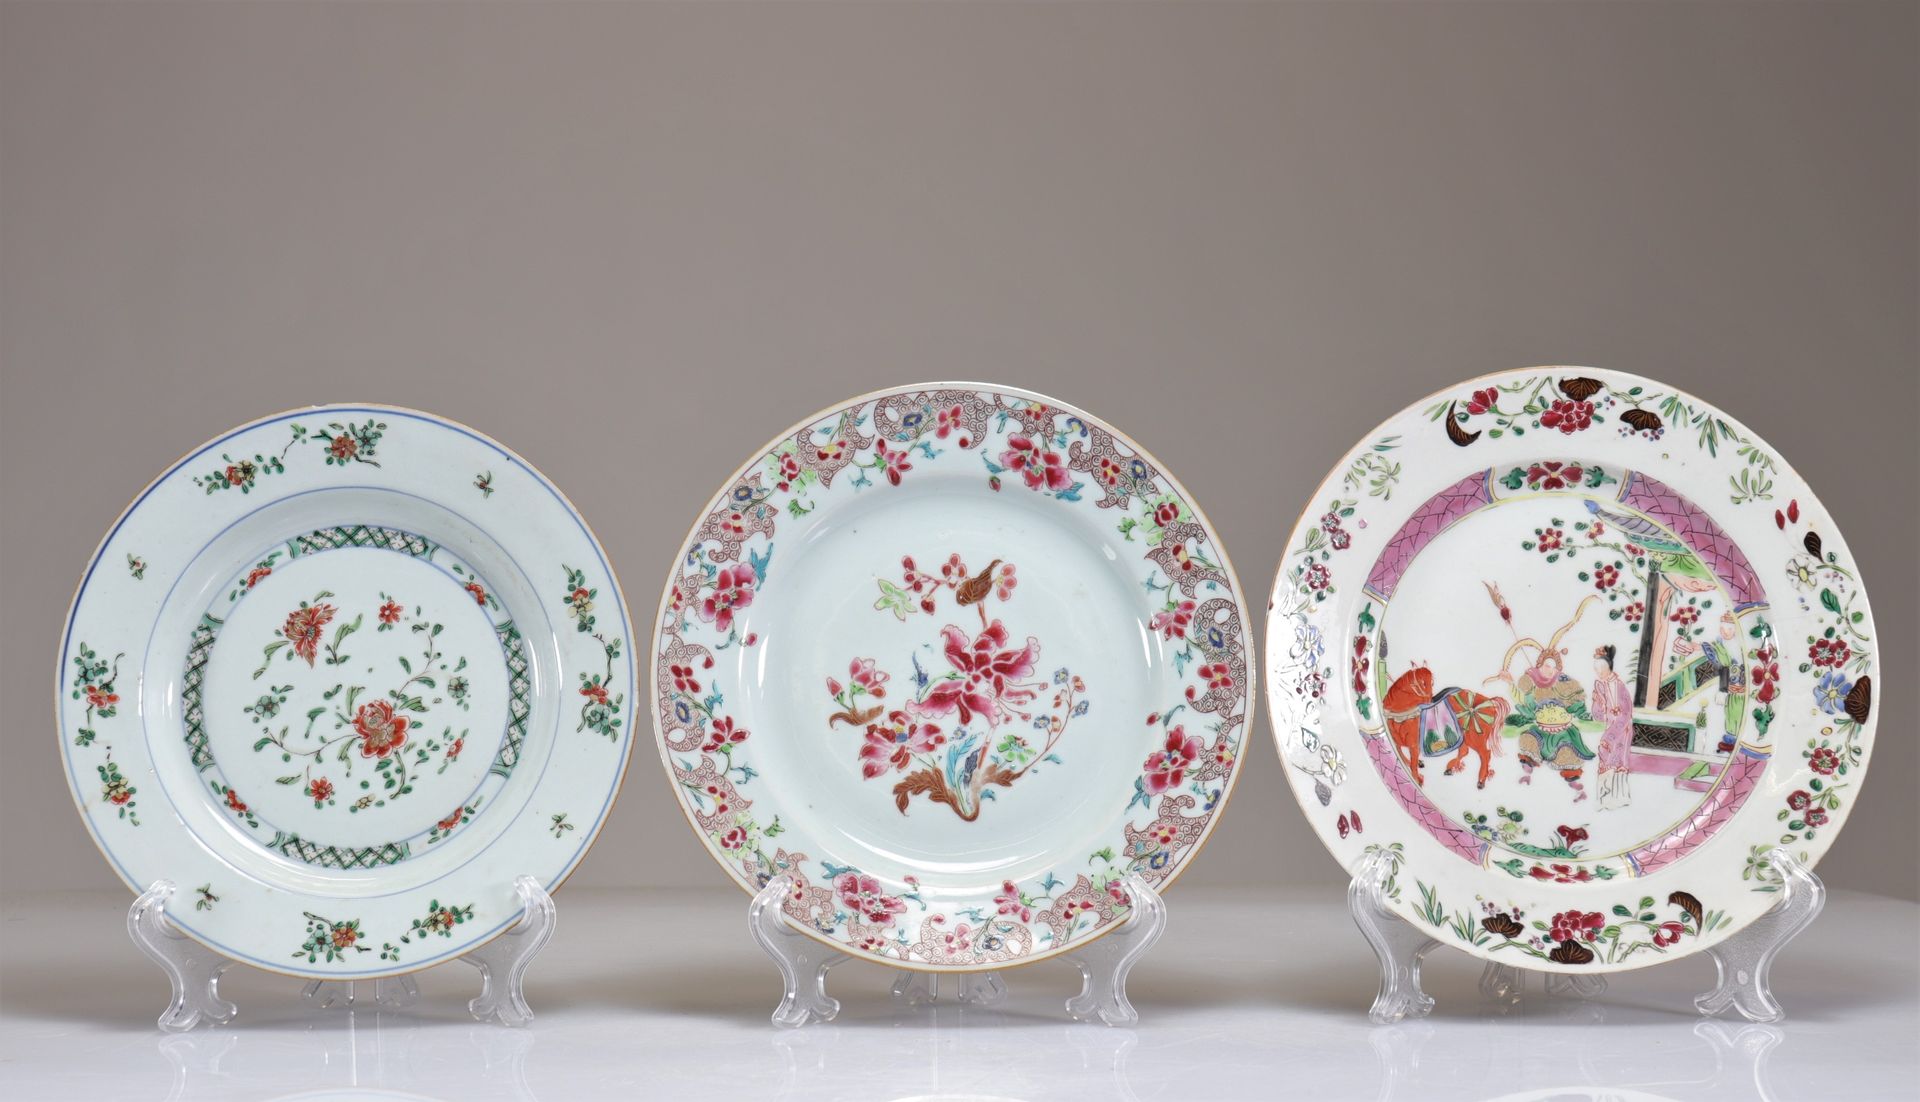 Null Plates (3) porcelain XVIIIth century famille rose
Weight: 990 g
Region: Chi&hellip;